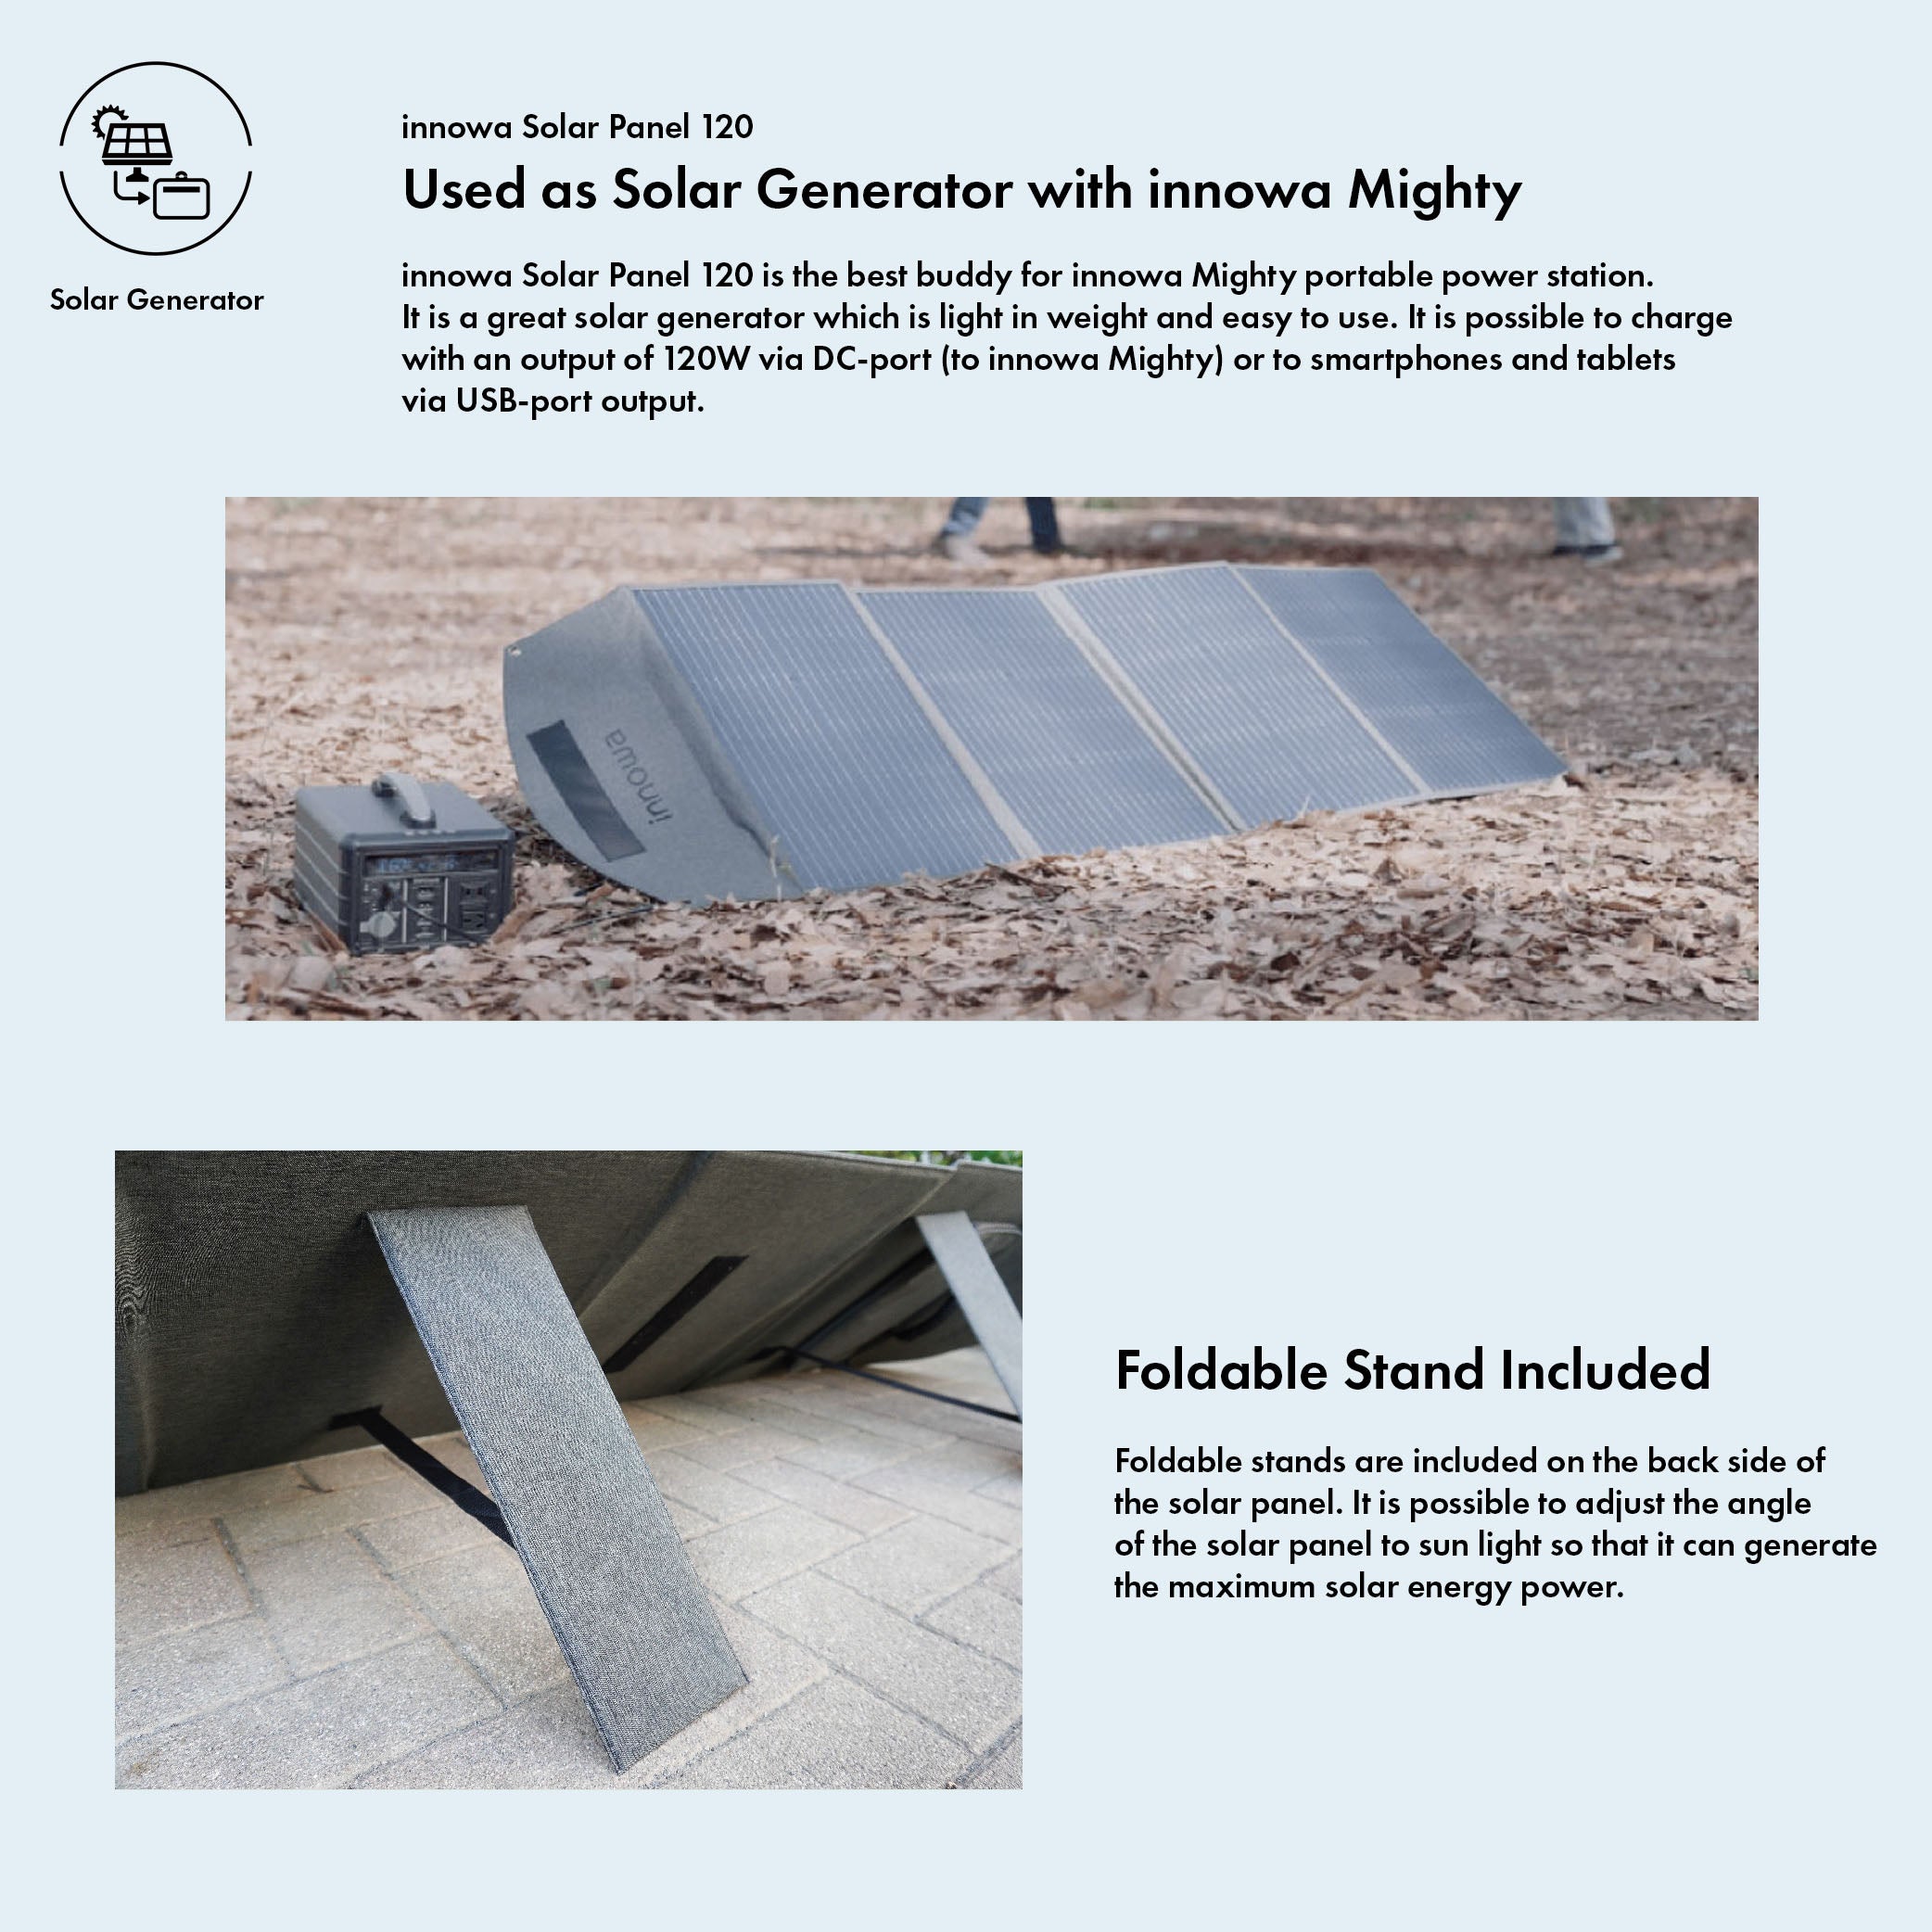 innowa Solar Panel 120